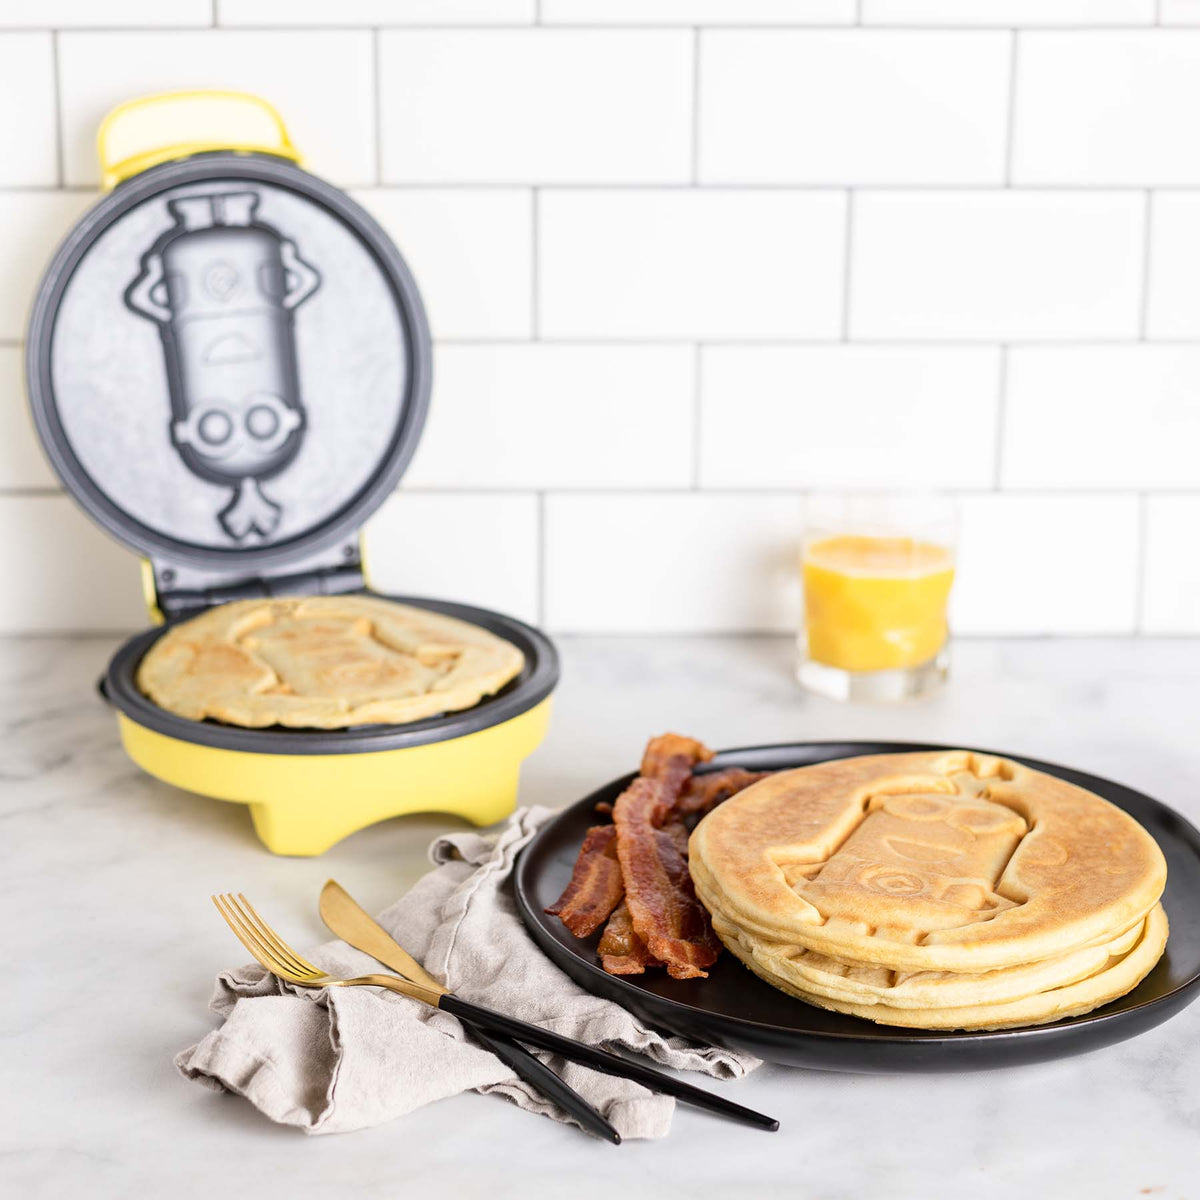 Minions Kevin Pancake Maker - Uncanny Brands